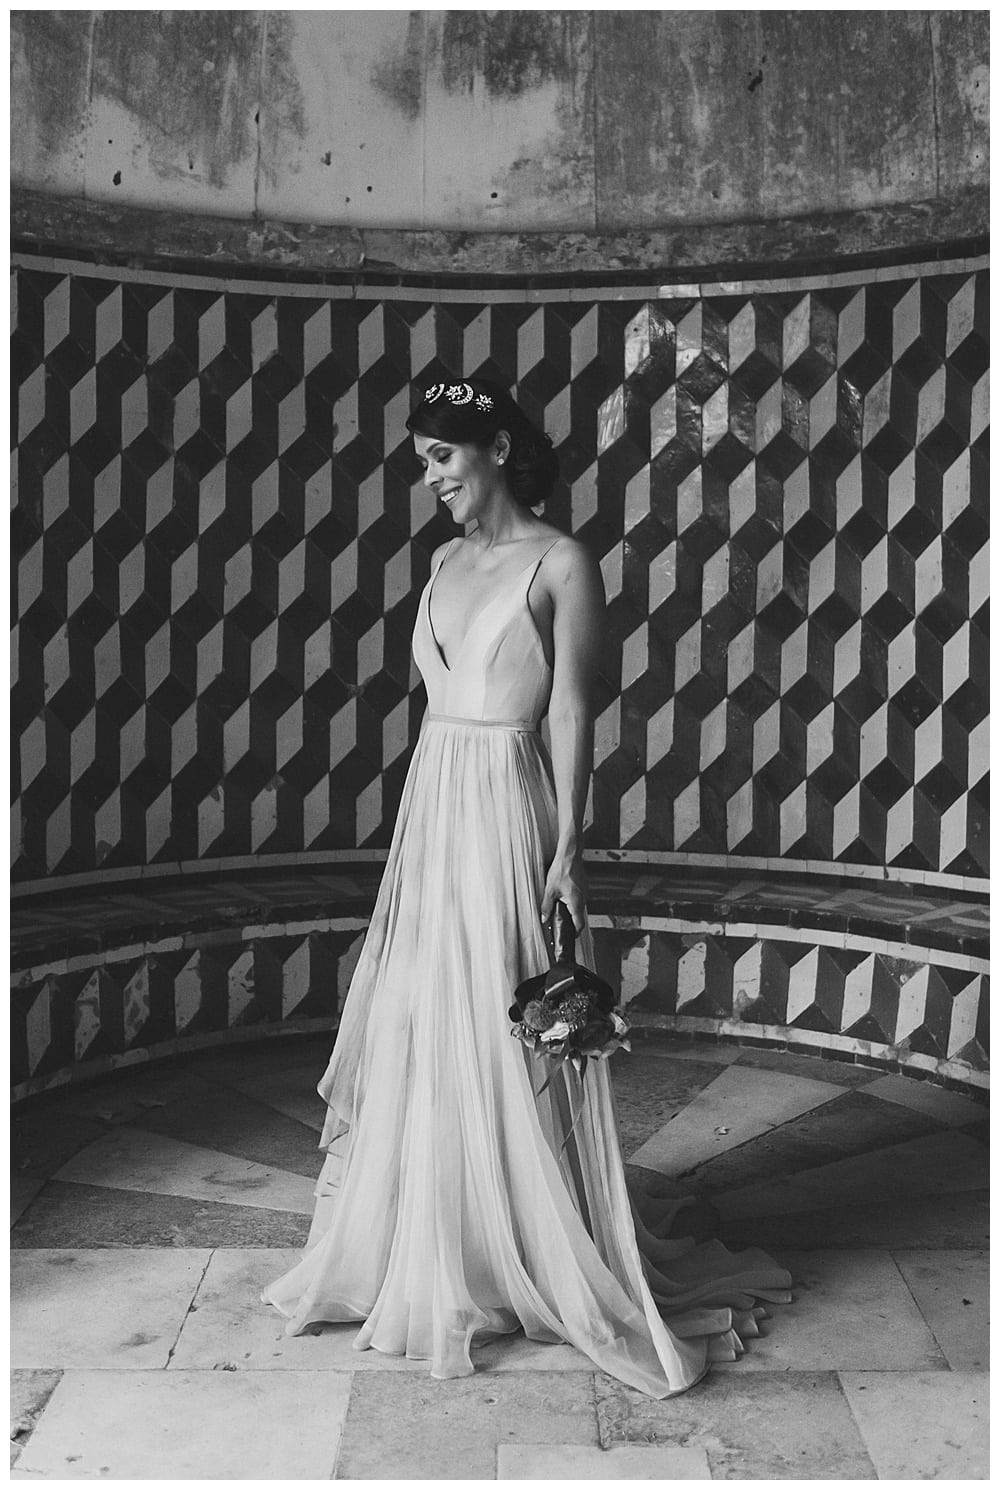 raincloud wedding dress by romantic Leanne Marshall #LeanneMarshall #sintra #sintrawedding